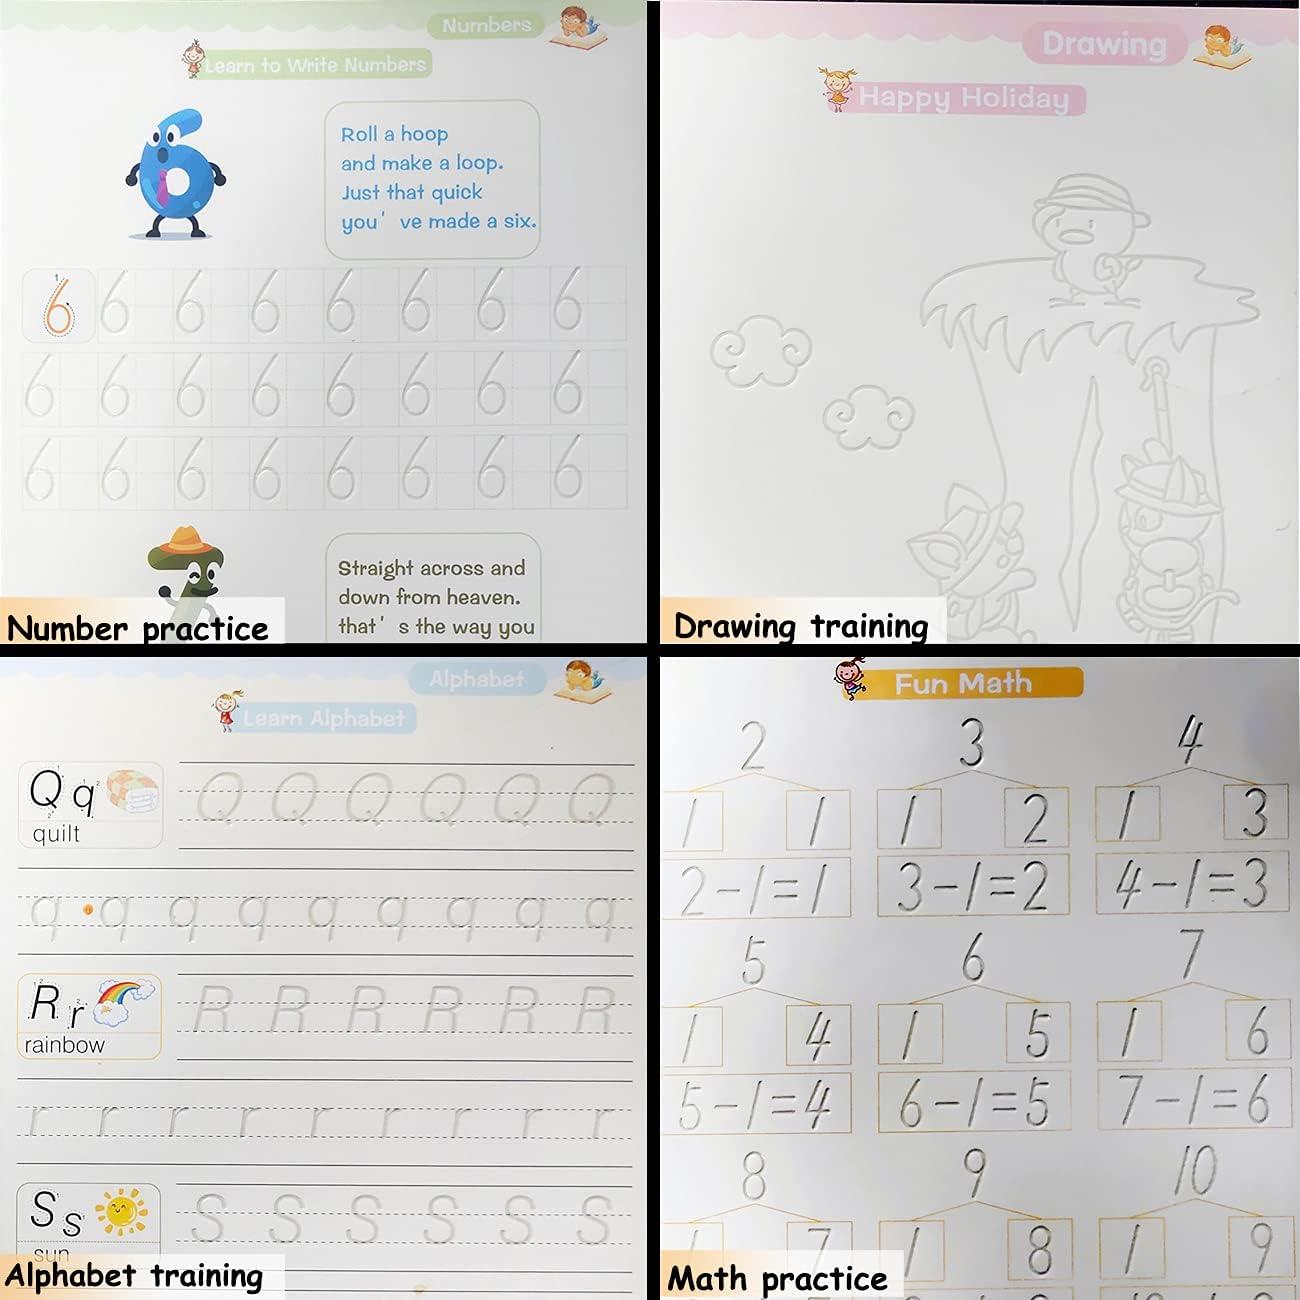 Magic Handwriting Copybook Reused Groove Practice Calligraphy Books for Kids  UK